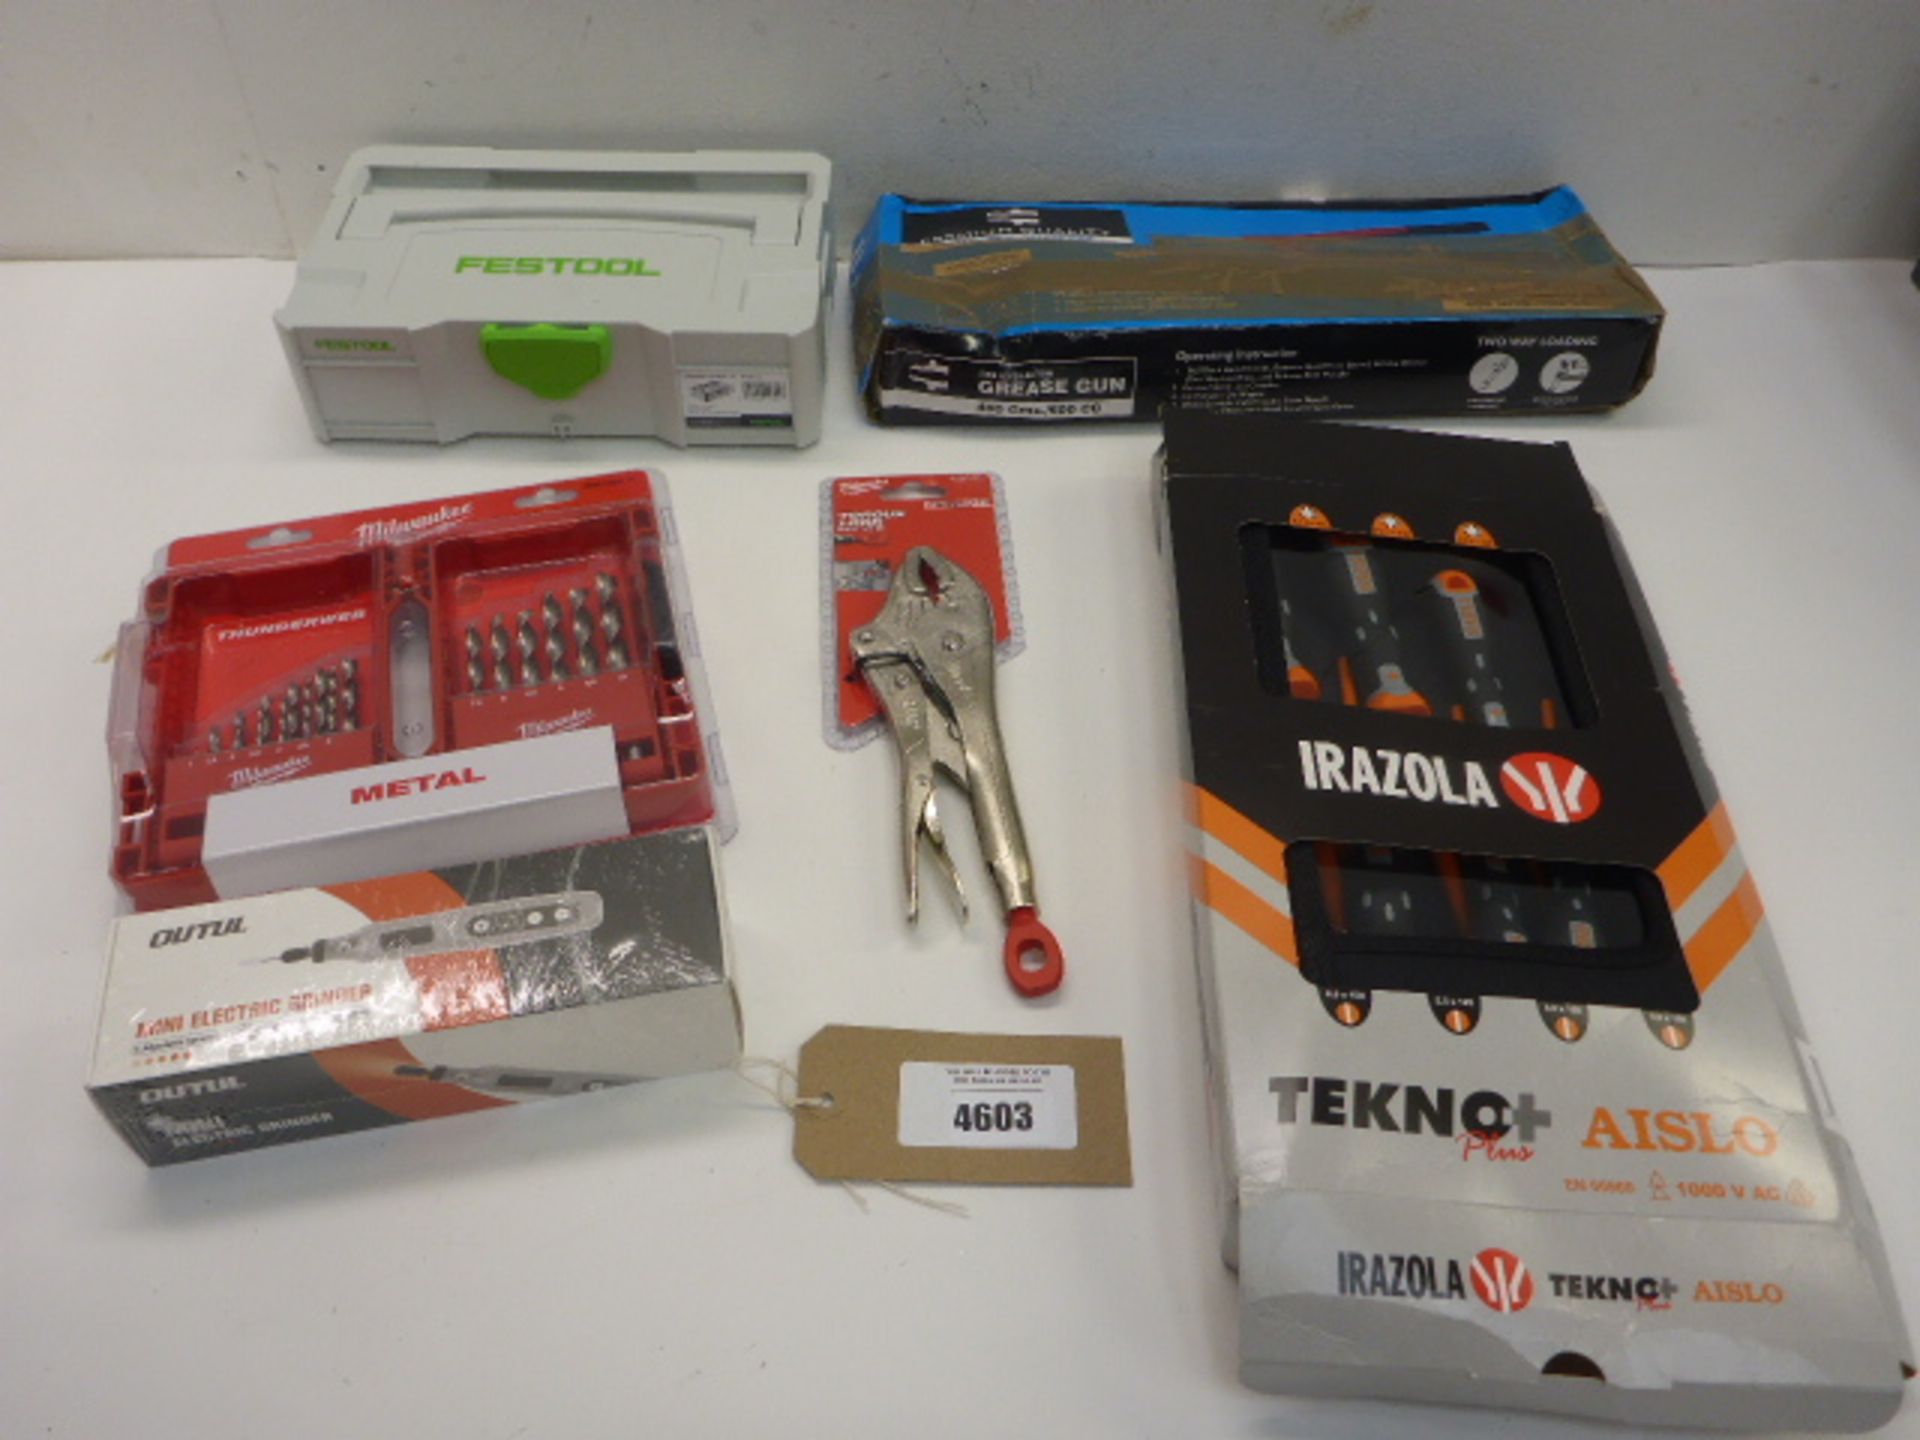 Festool tool case, grease gun, Milwaukee metal drill bits, mini electric grinder, torque grip and